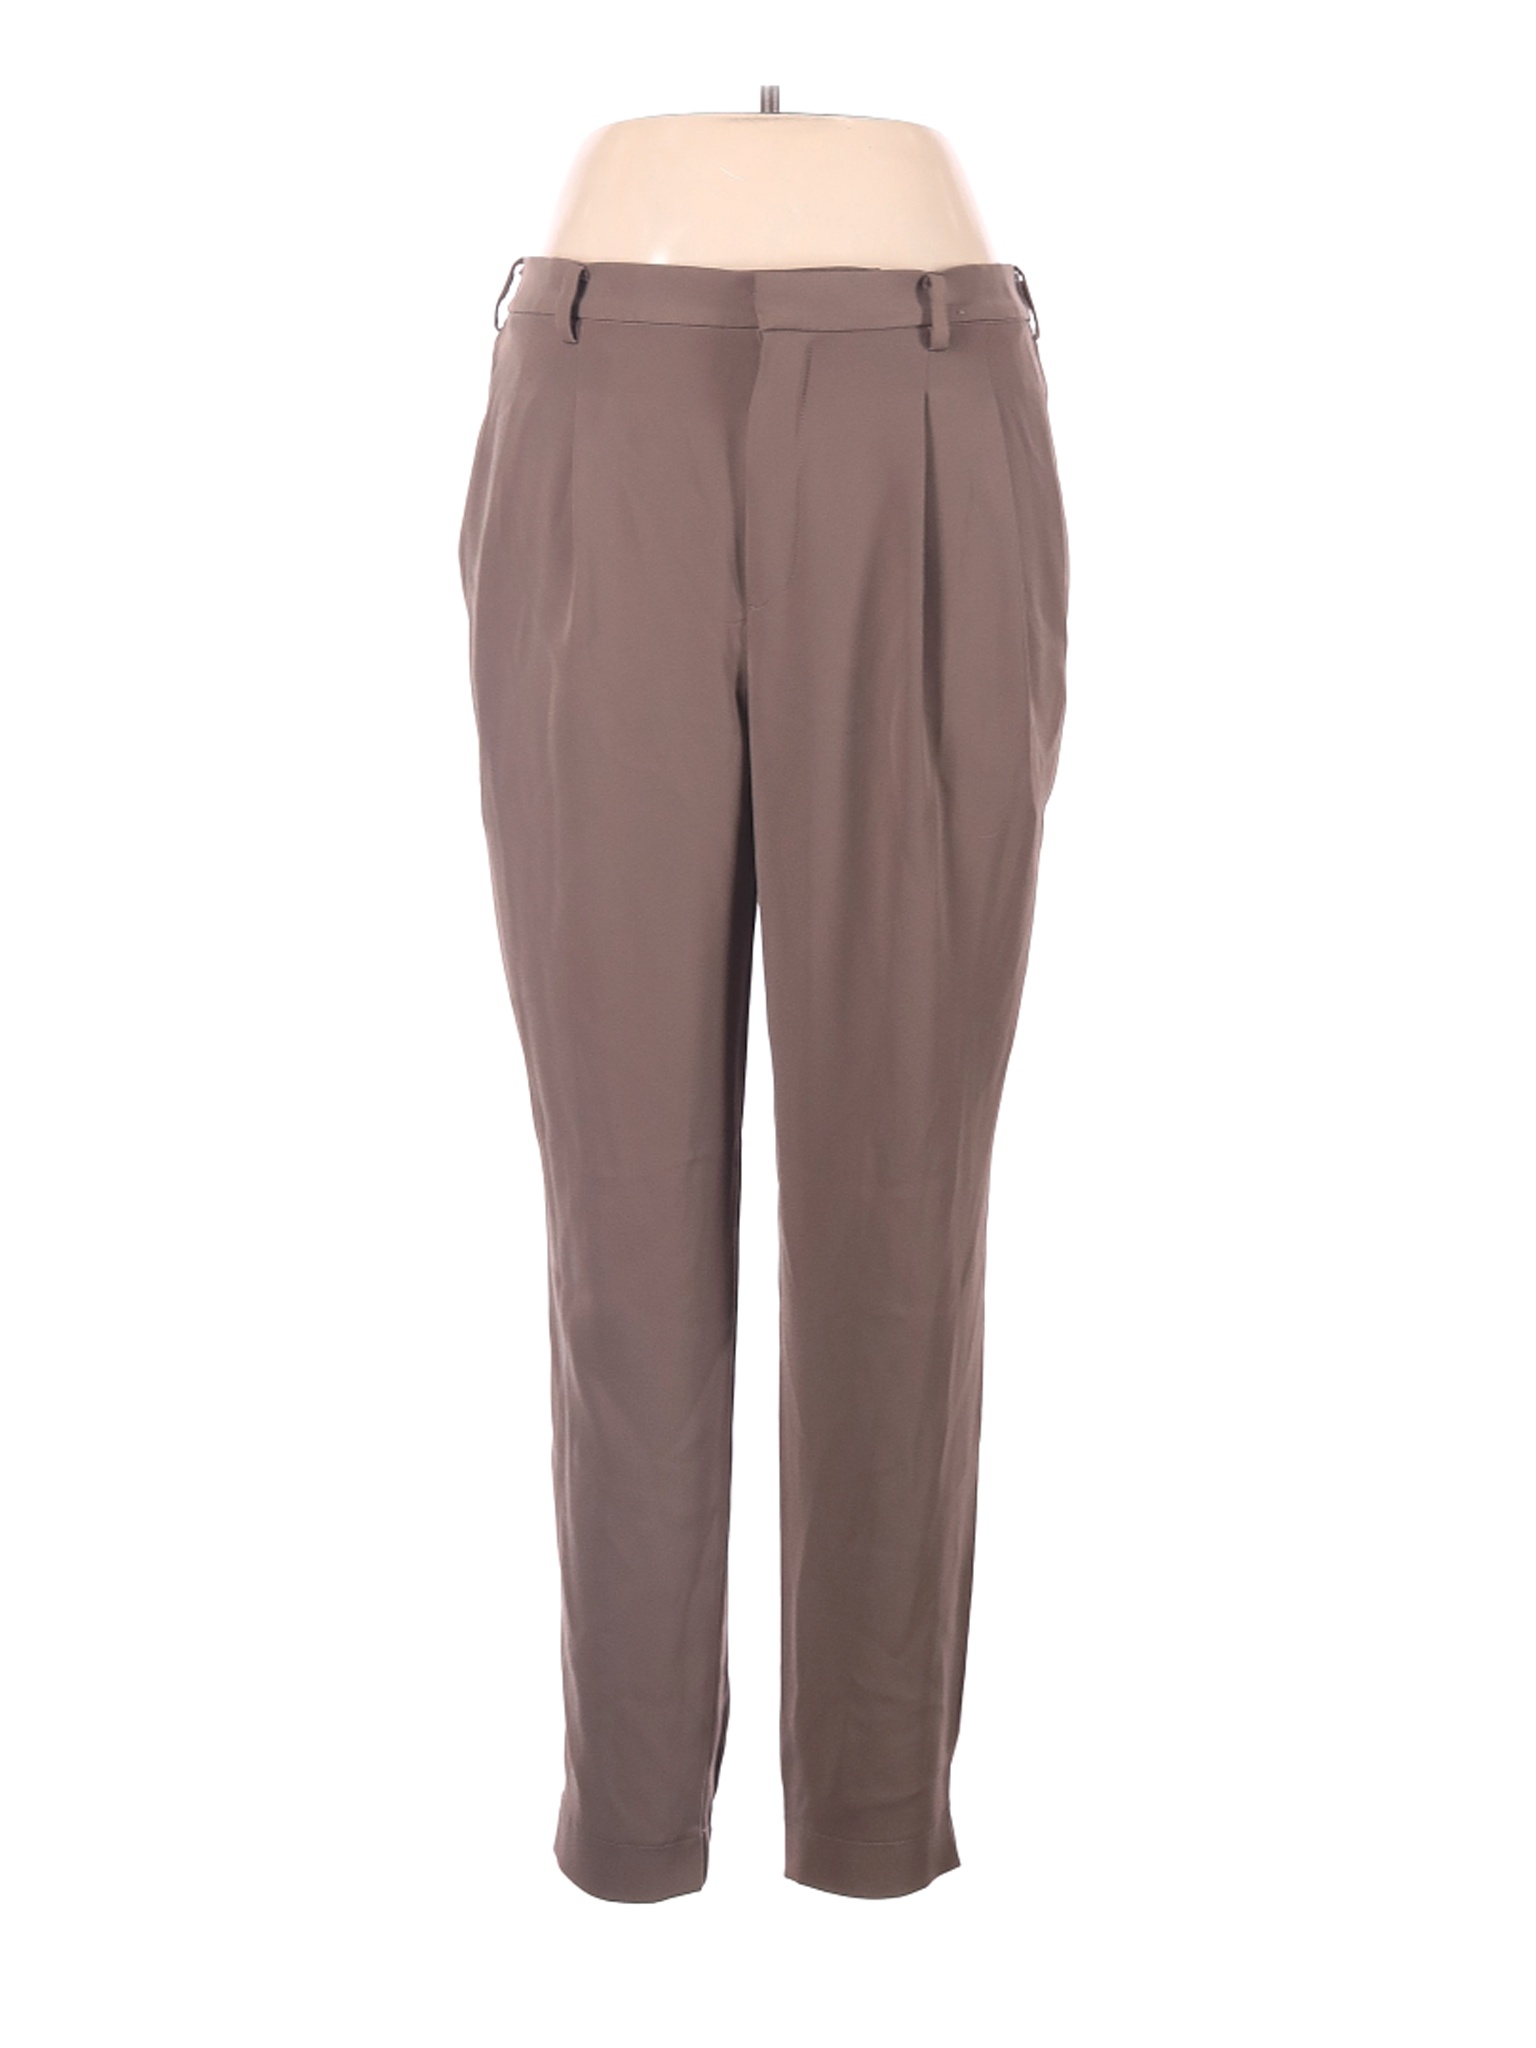 Uniqlo Women Brown Casual Pants 30W | eBay